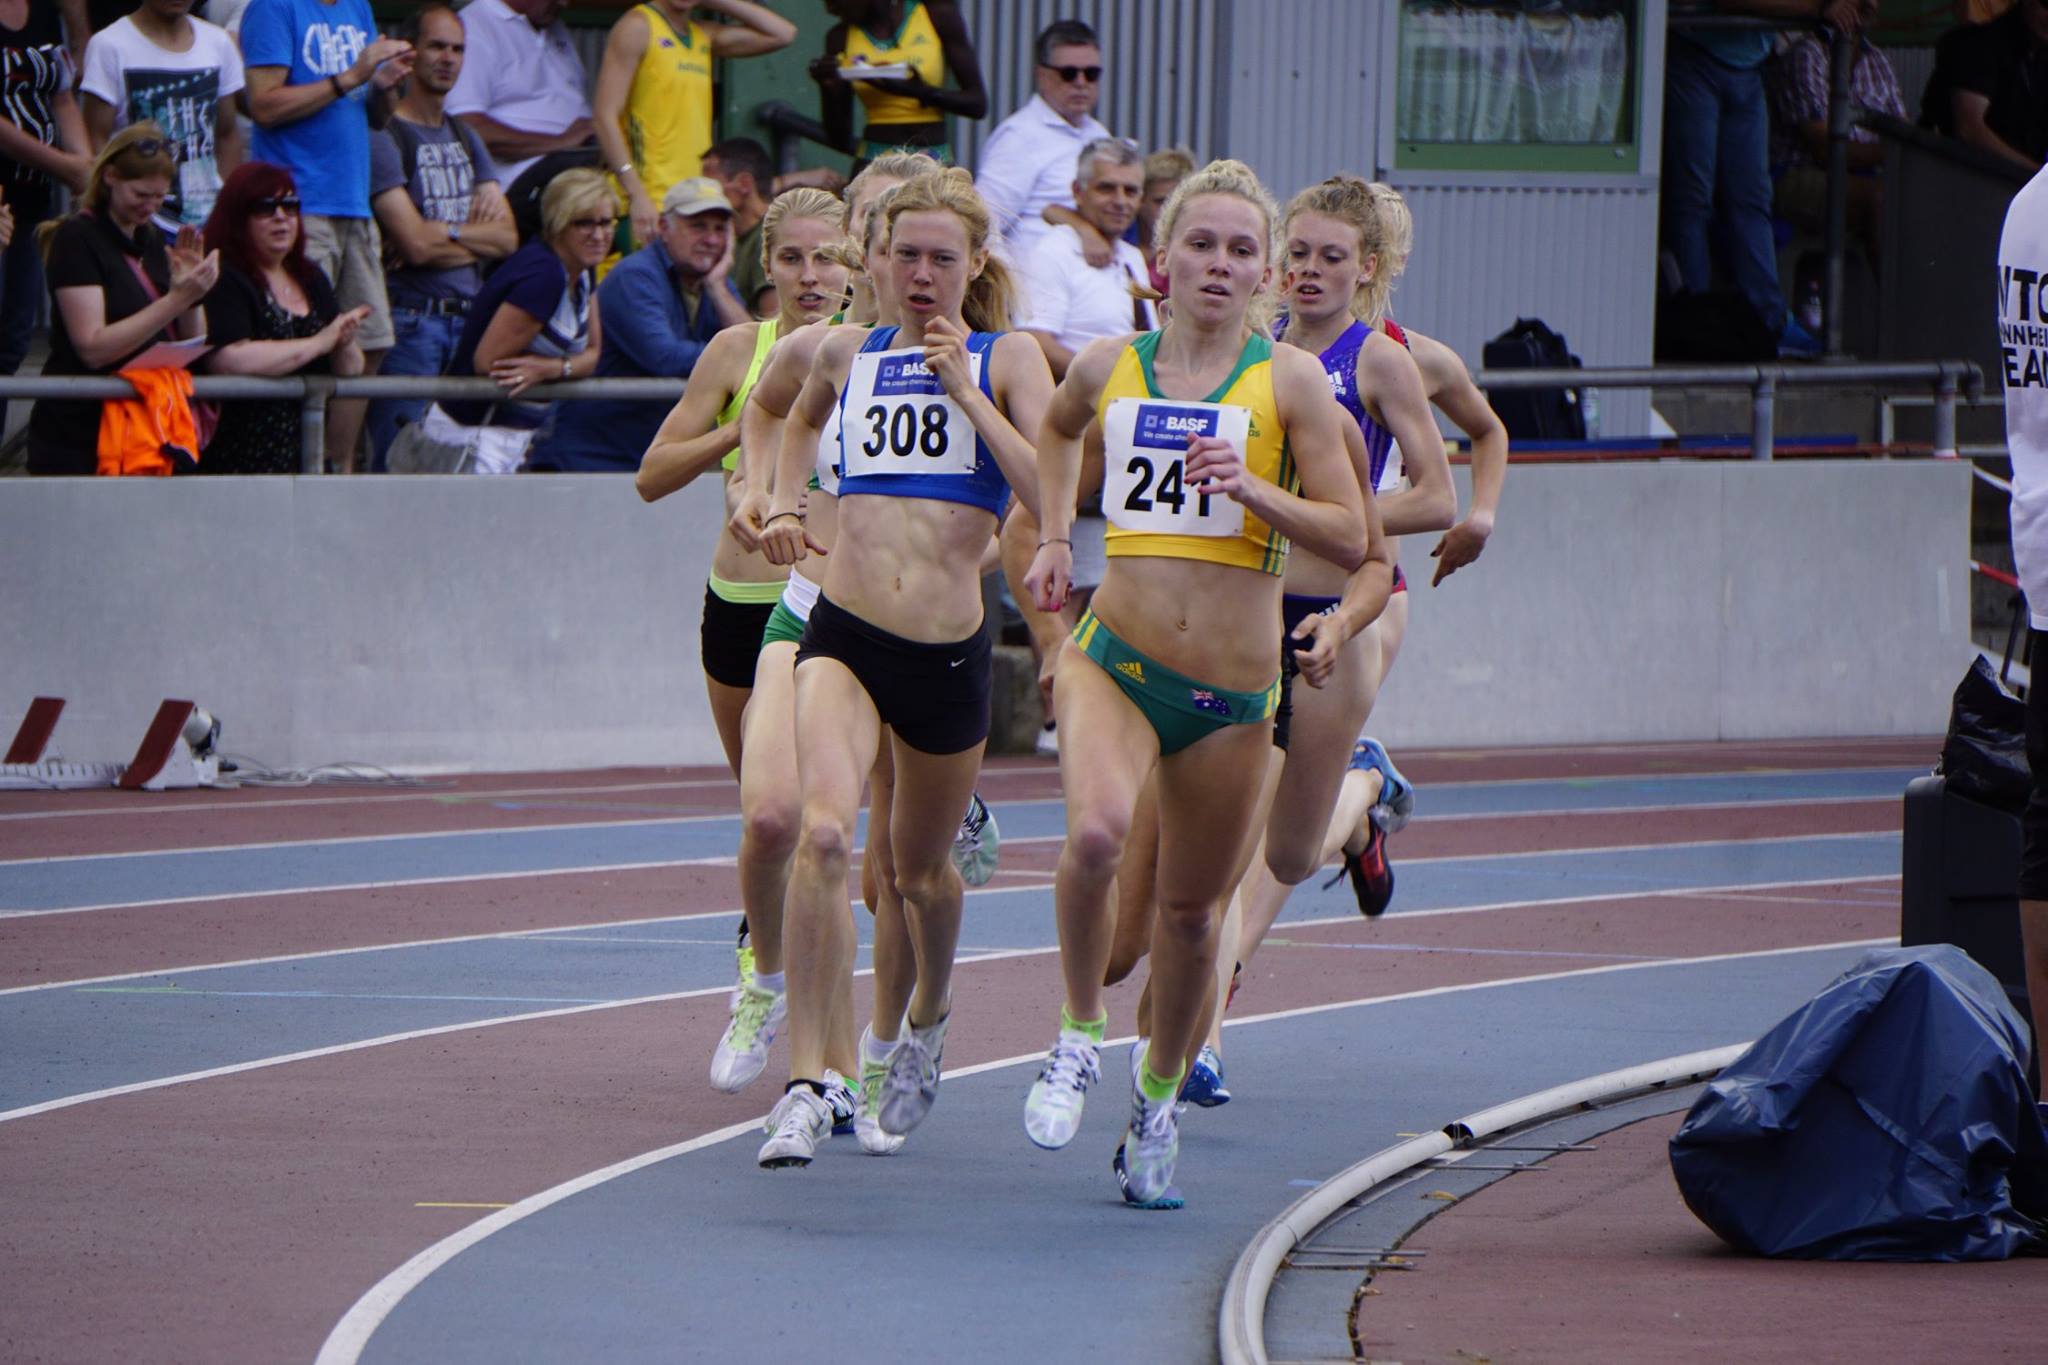 Mannheim, Germany, Sarah Billings: Photo courtesy of Athletics Australia http://athletics.com.au/